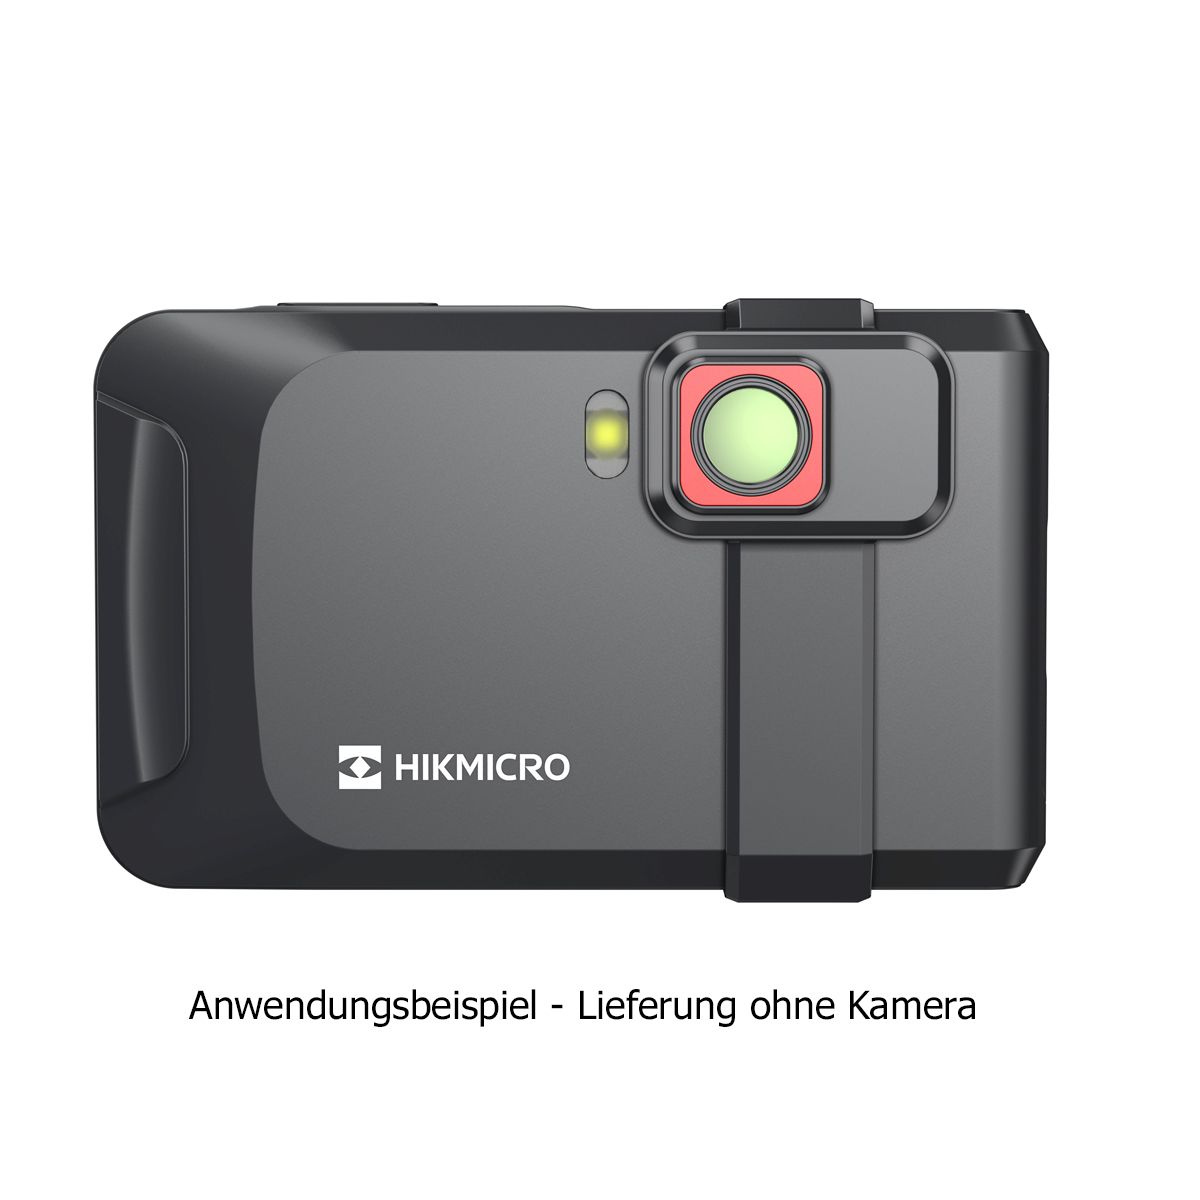 Hikmicro HM-P201-Macro Objektiv für Pocket 1